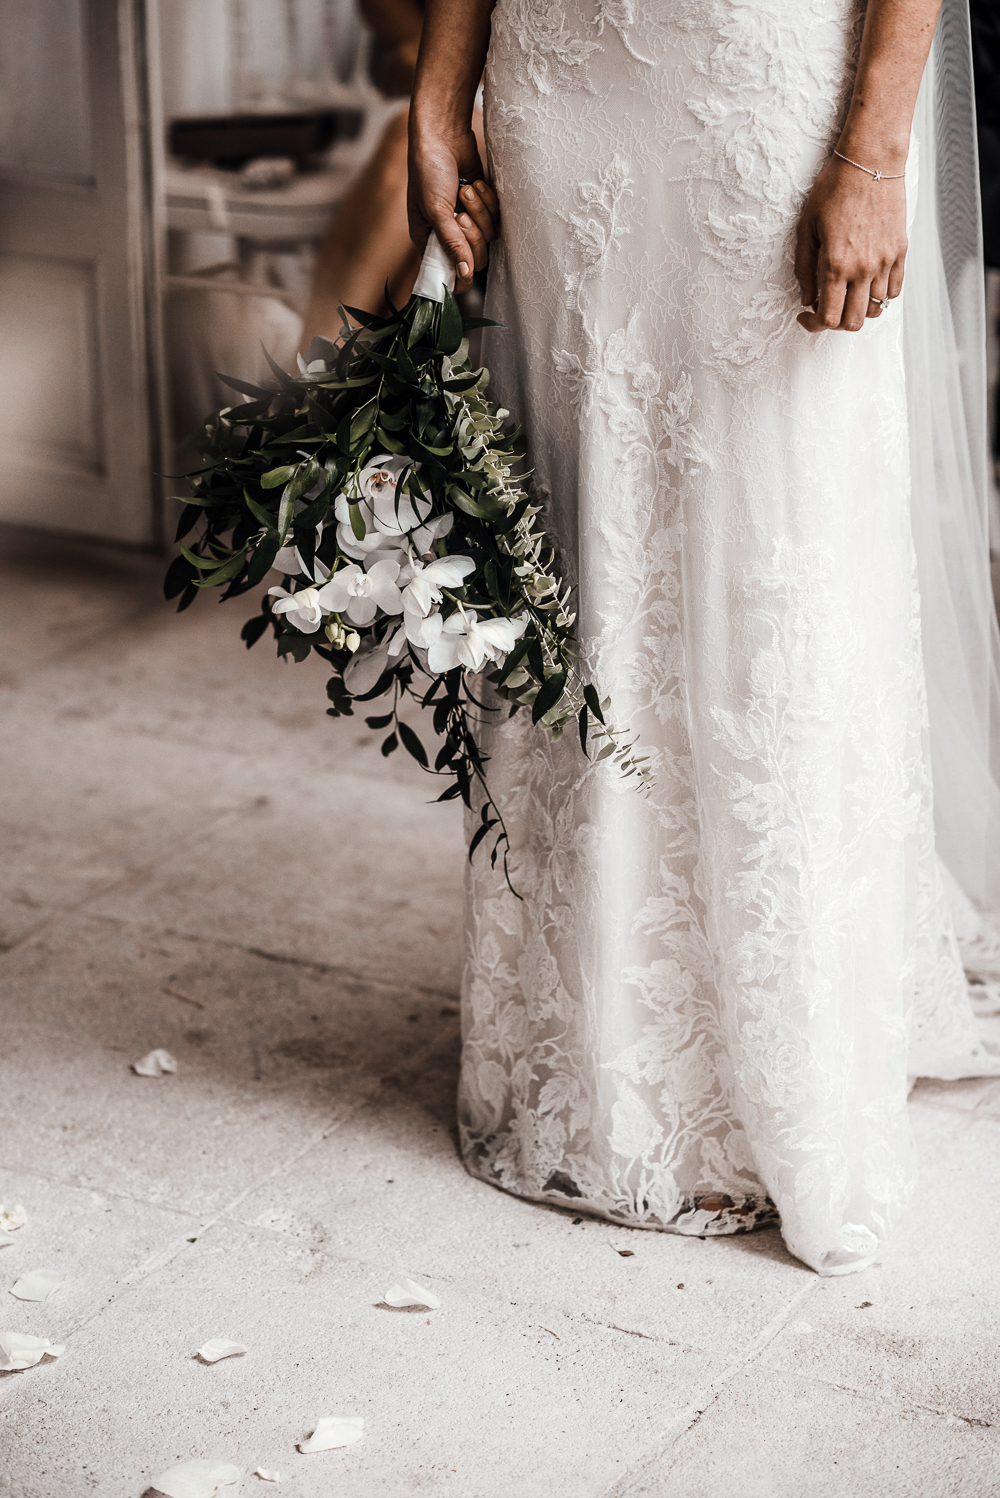 arisa & Cliff's beautiful Provencewedding